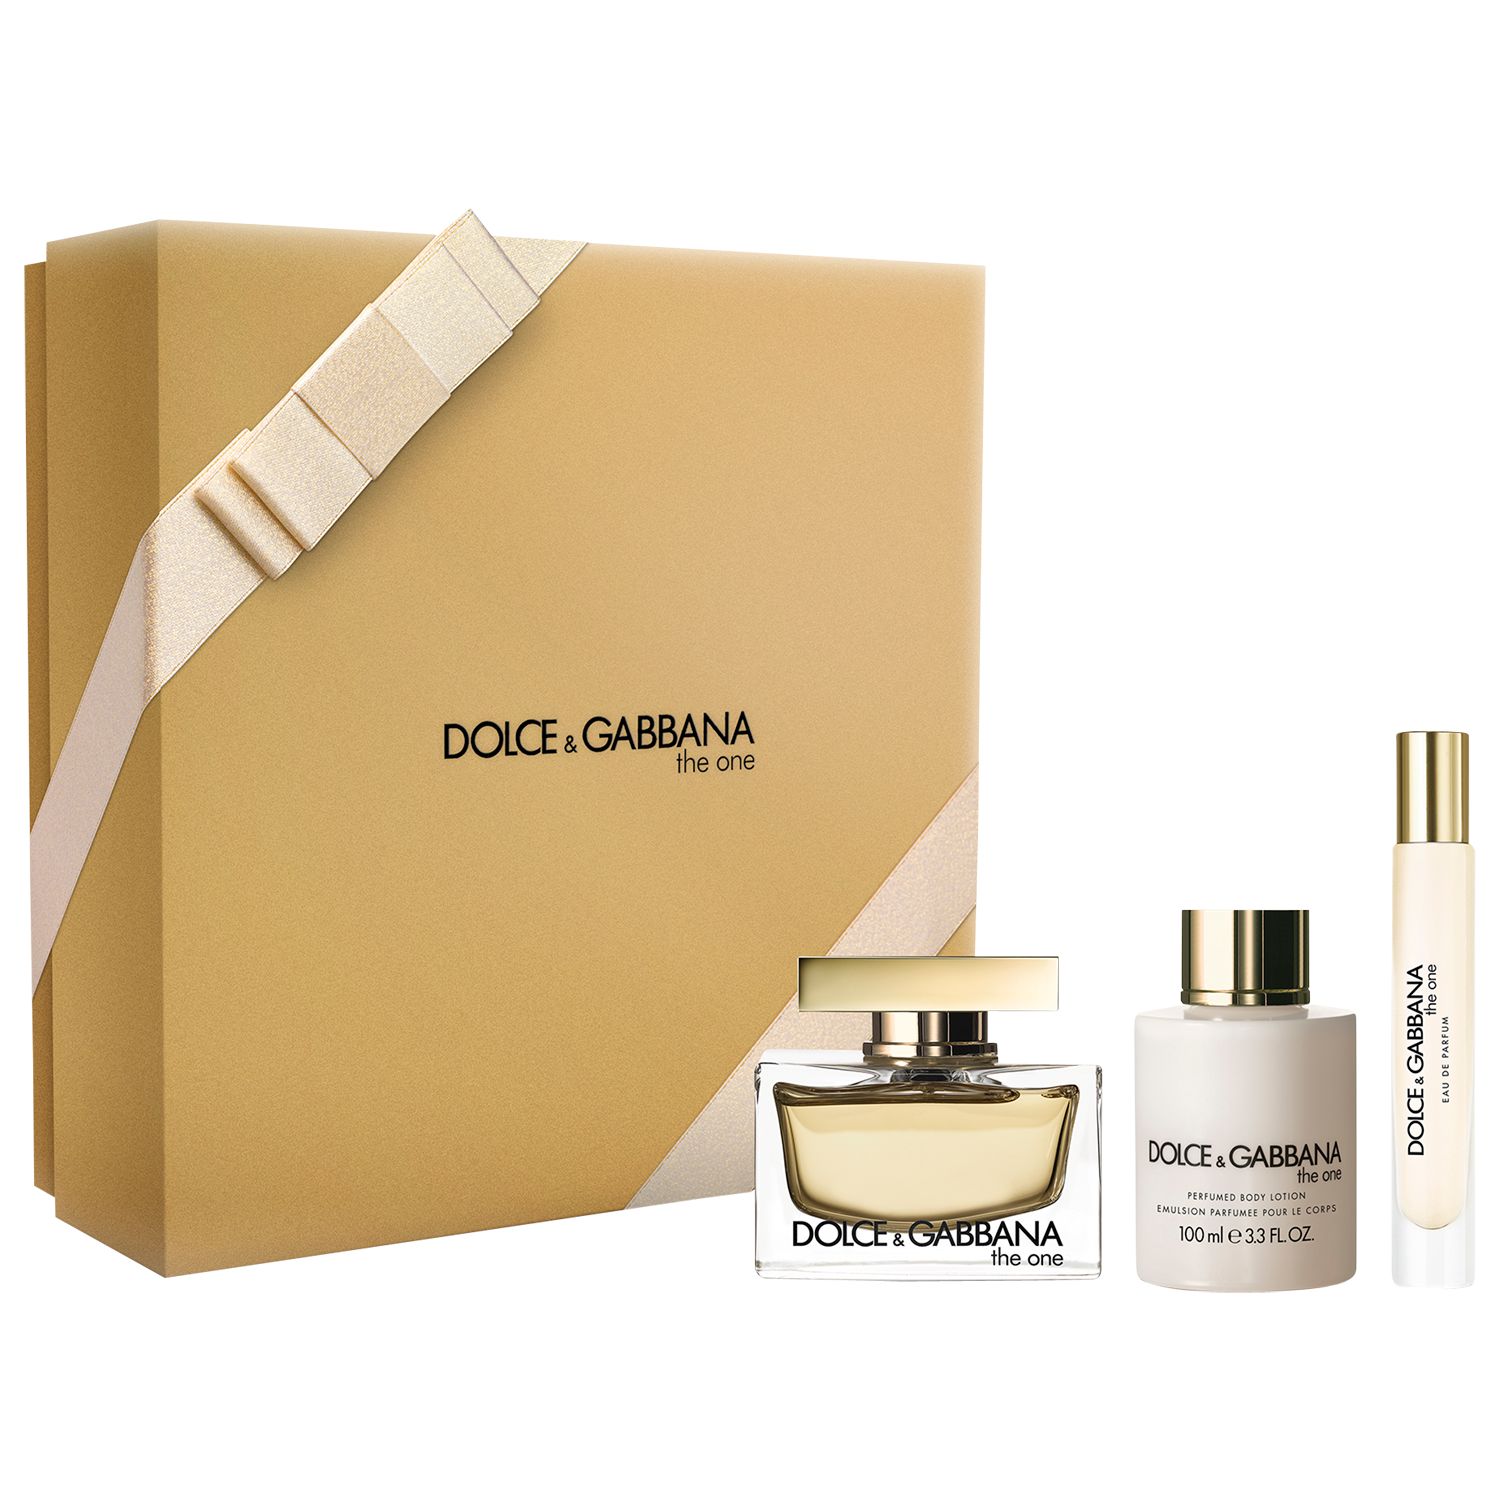 Dolce & Gabbana The One 75ml Eau de Parfum Fragrance Gift Set at John ...